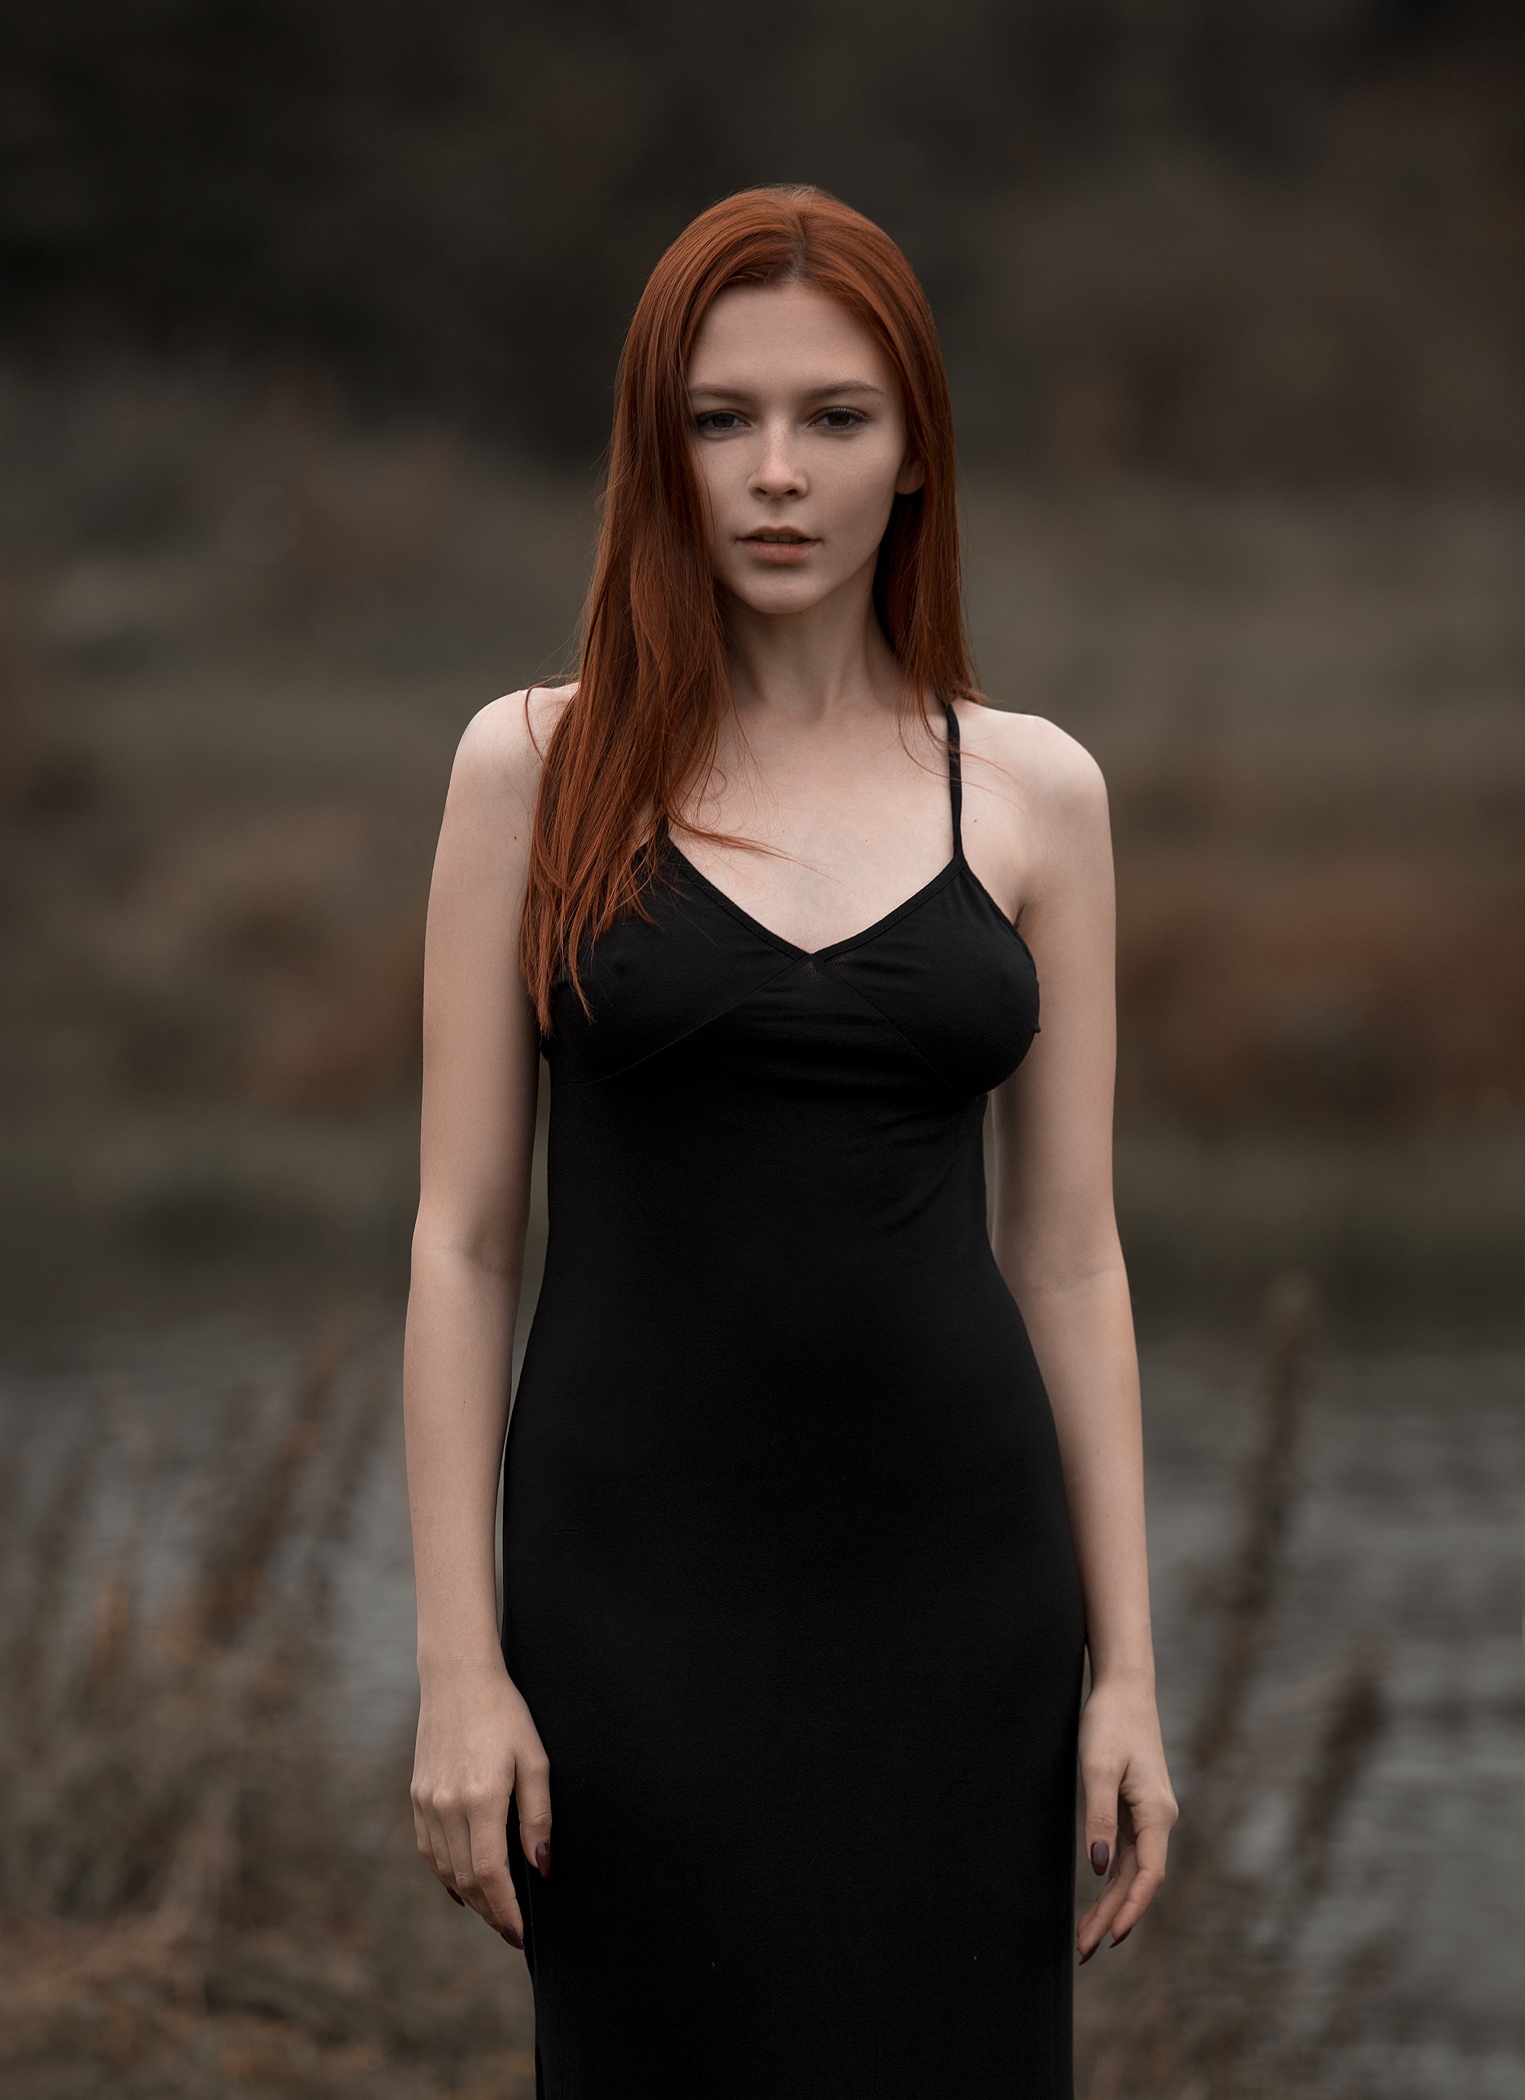 Women Model Redhead Looking At Viewer Portrait Display Parted Lips Dress Black Dress Depth Of Field  1525x2100